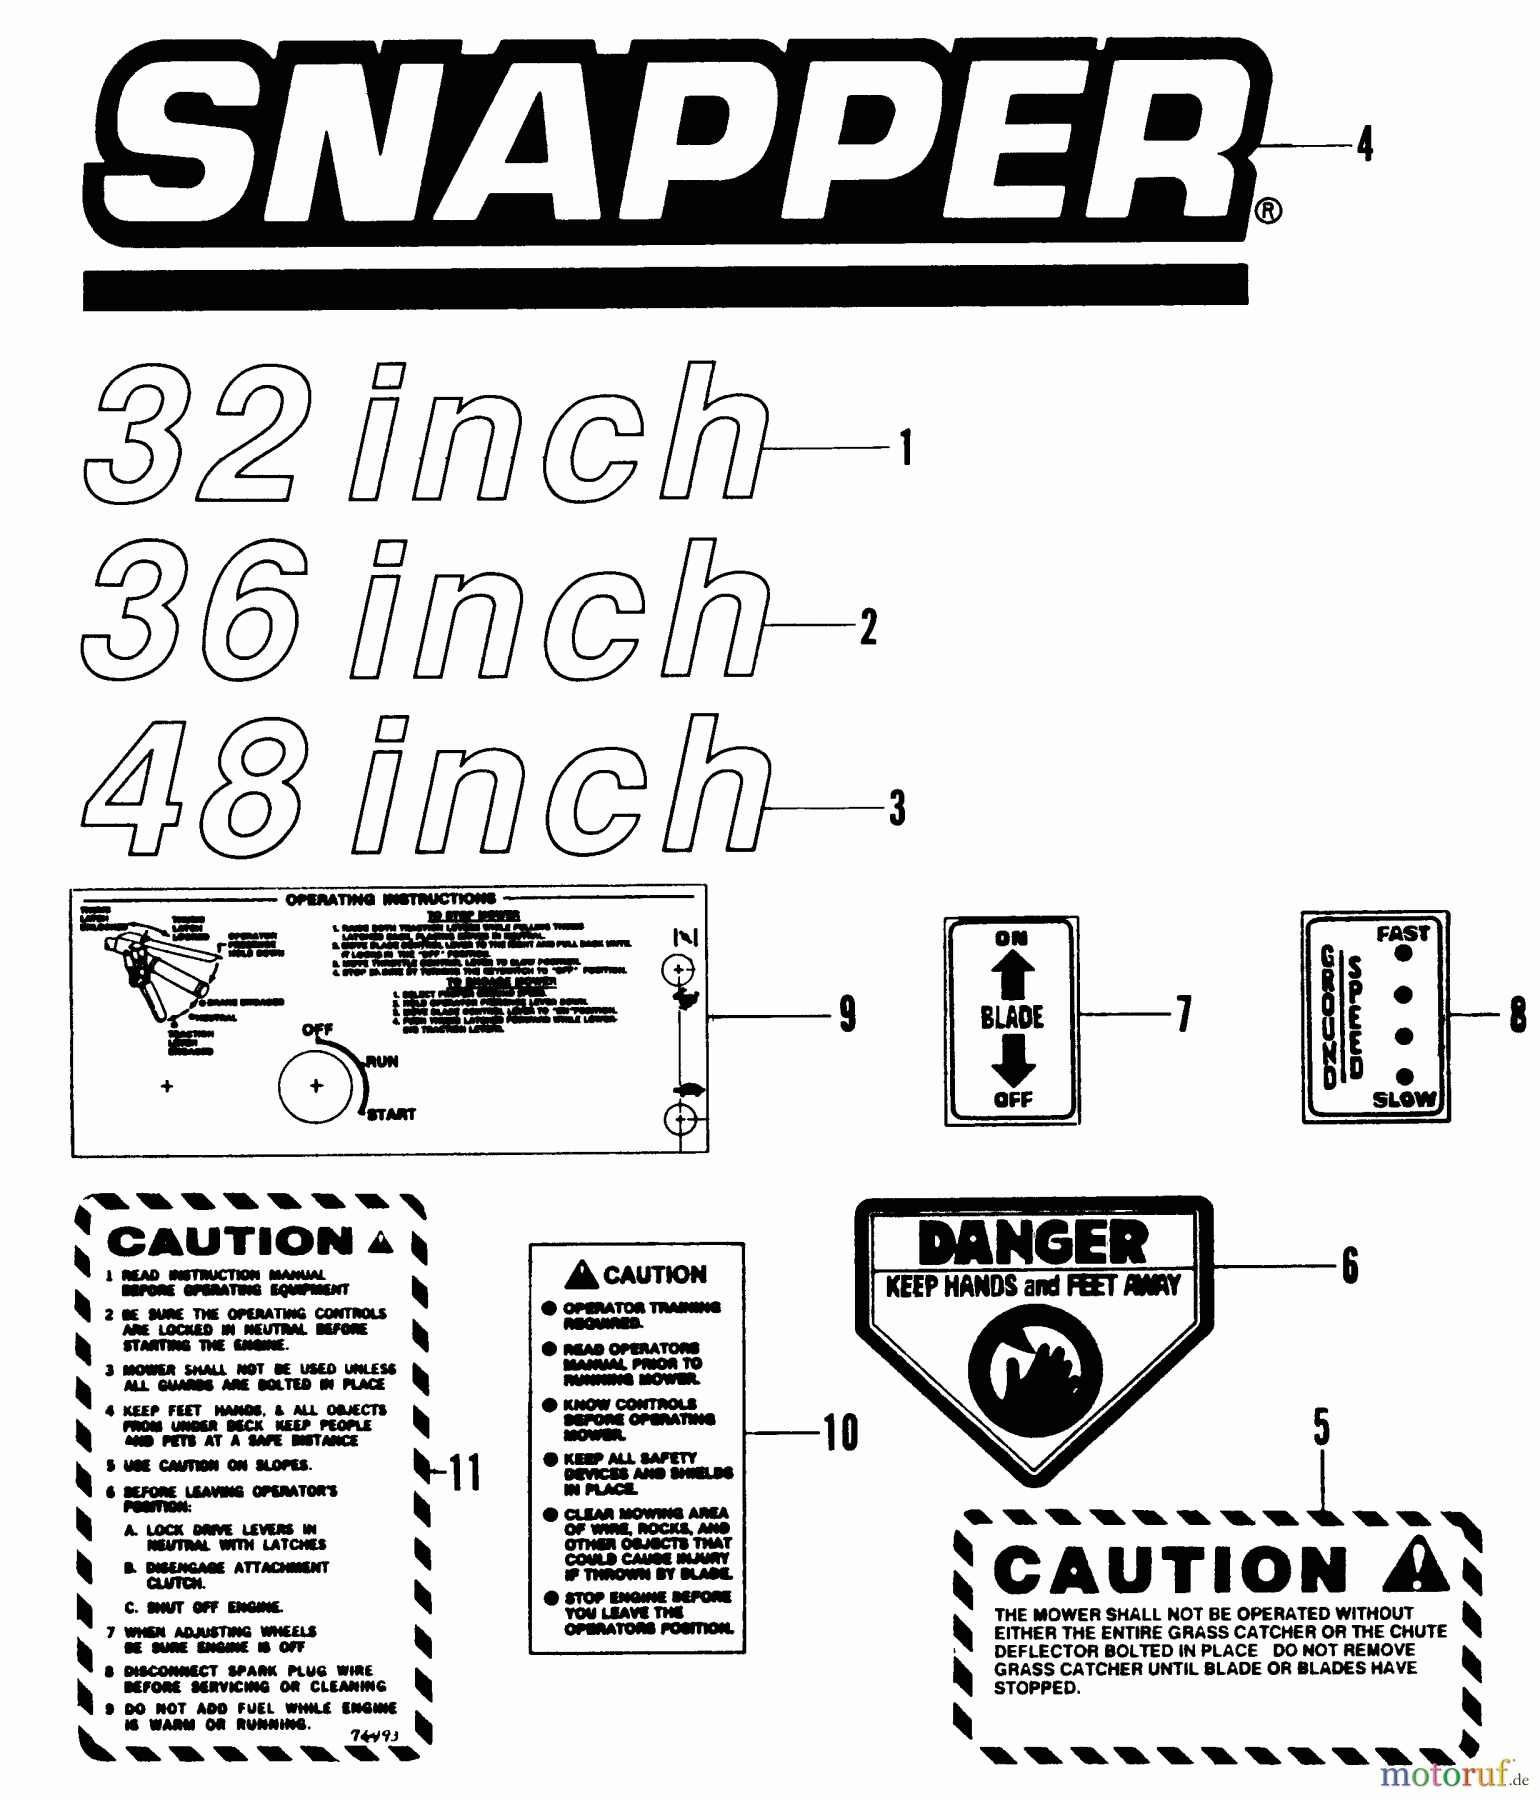  Snapper Rasenmäher für Großflächen W32122R - Snapper 32